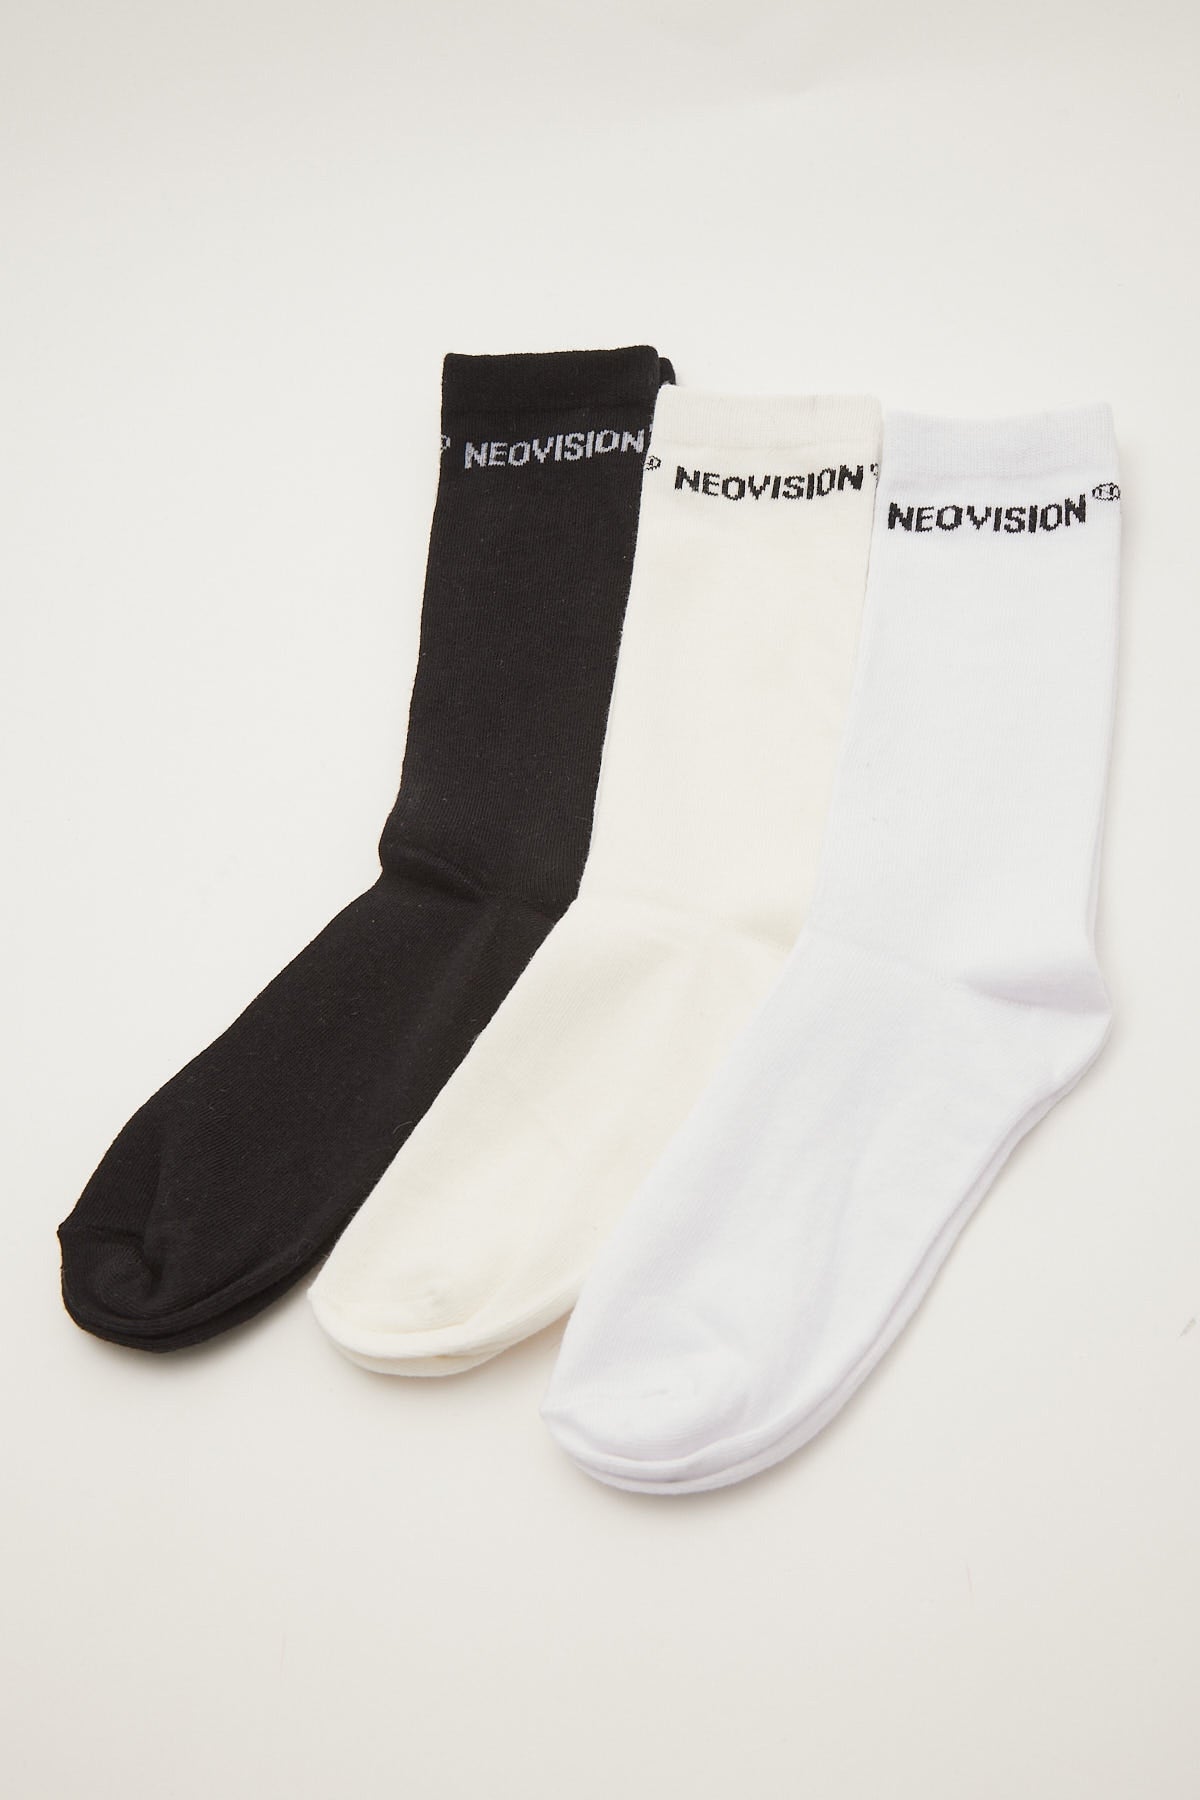 Neovision Curation Sock 3 Pack Black/Ecru/White